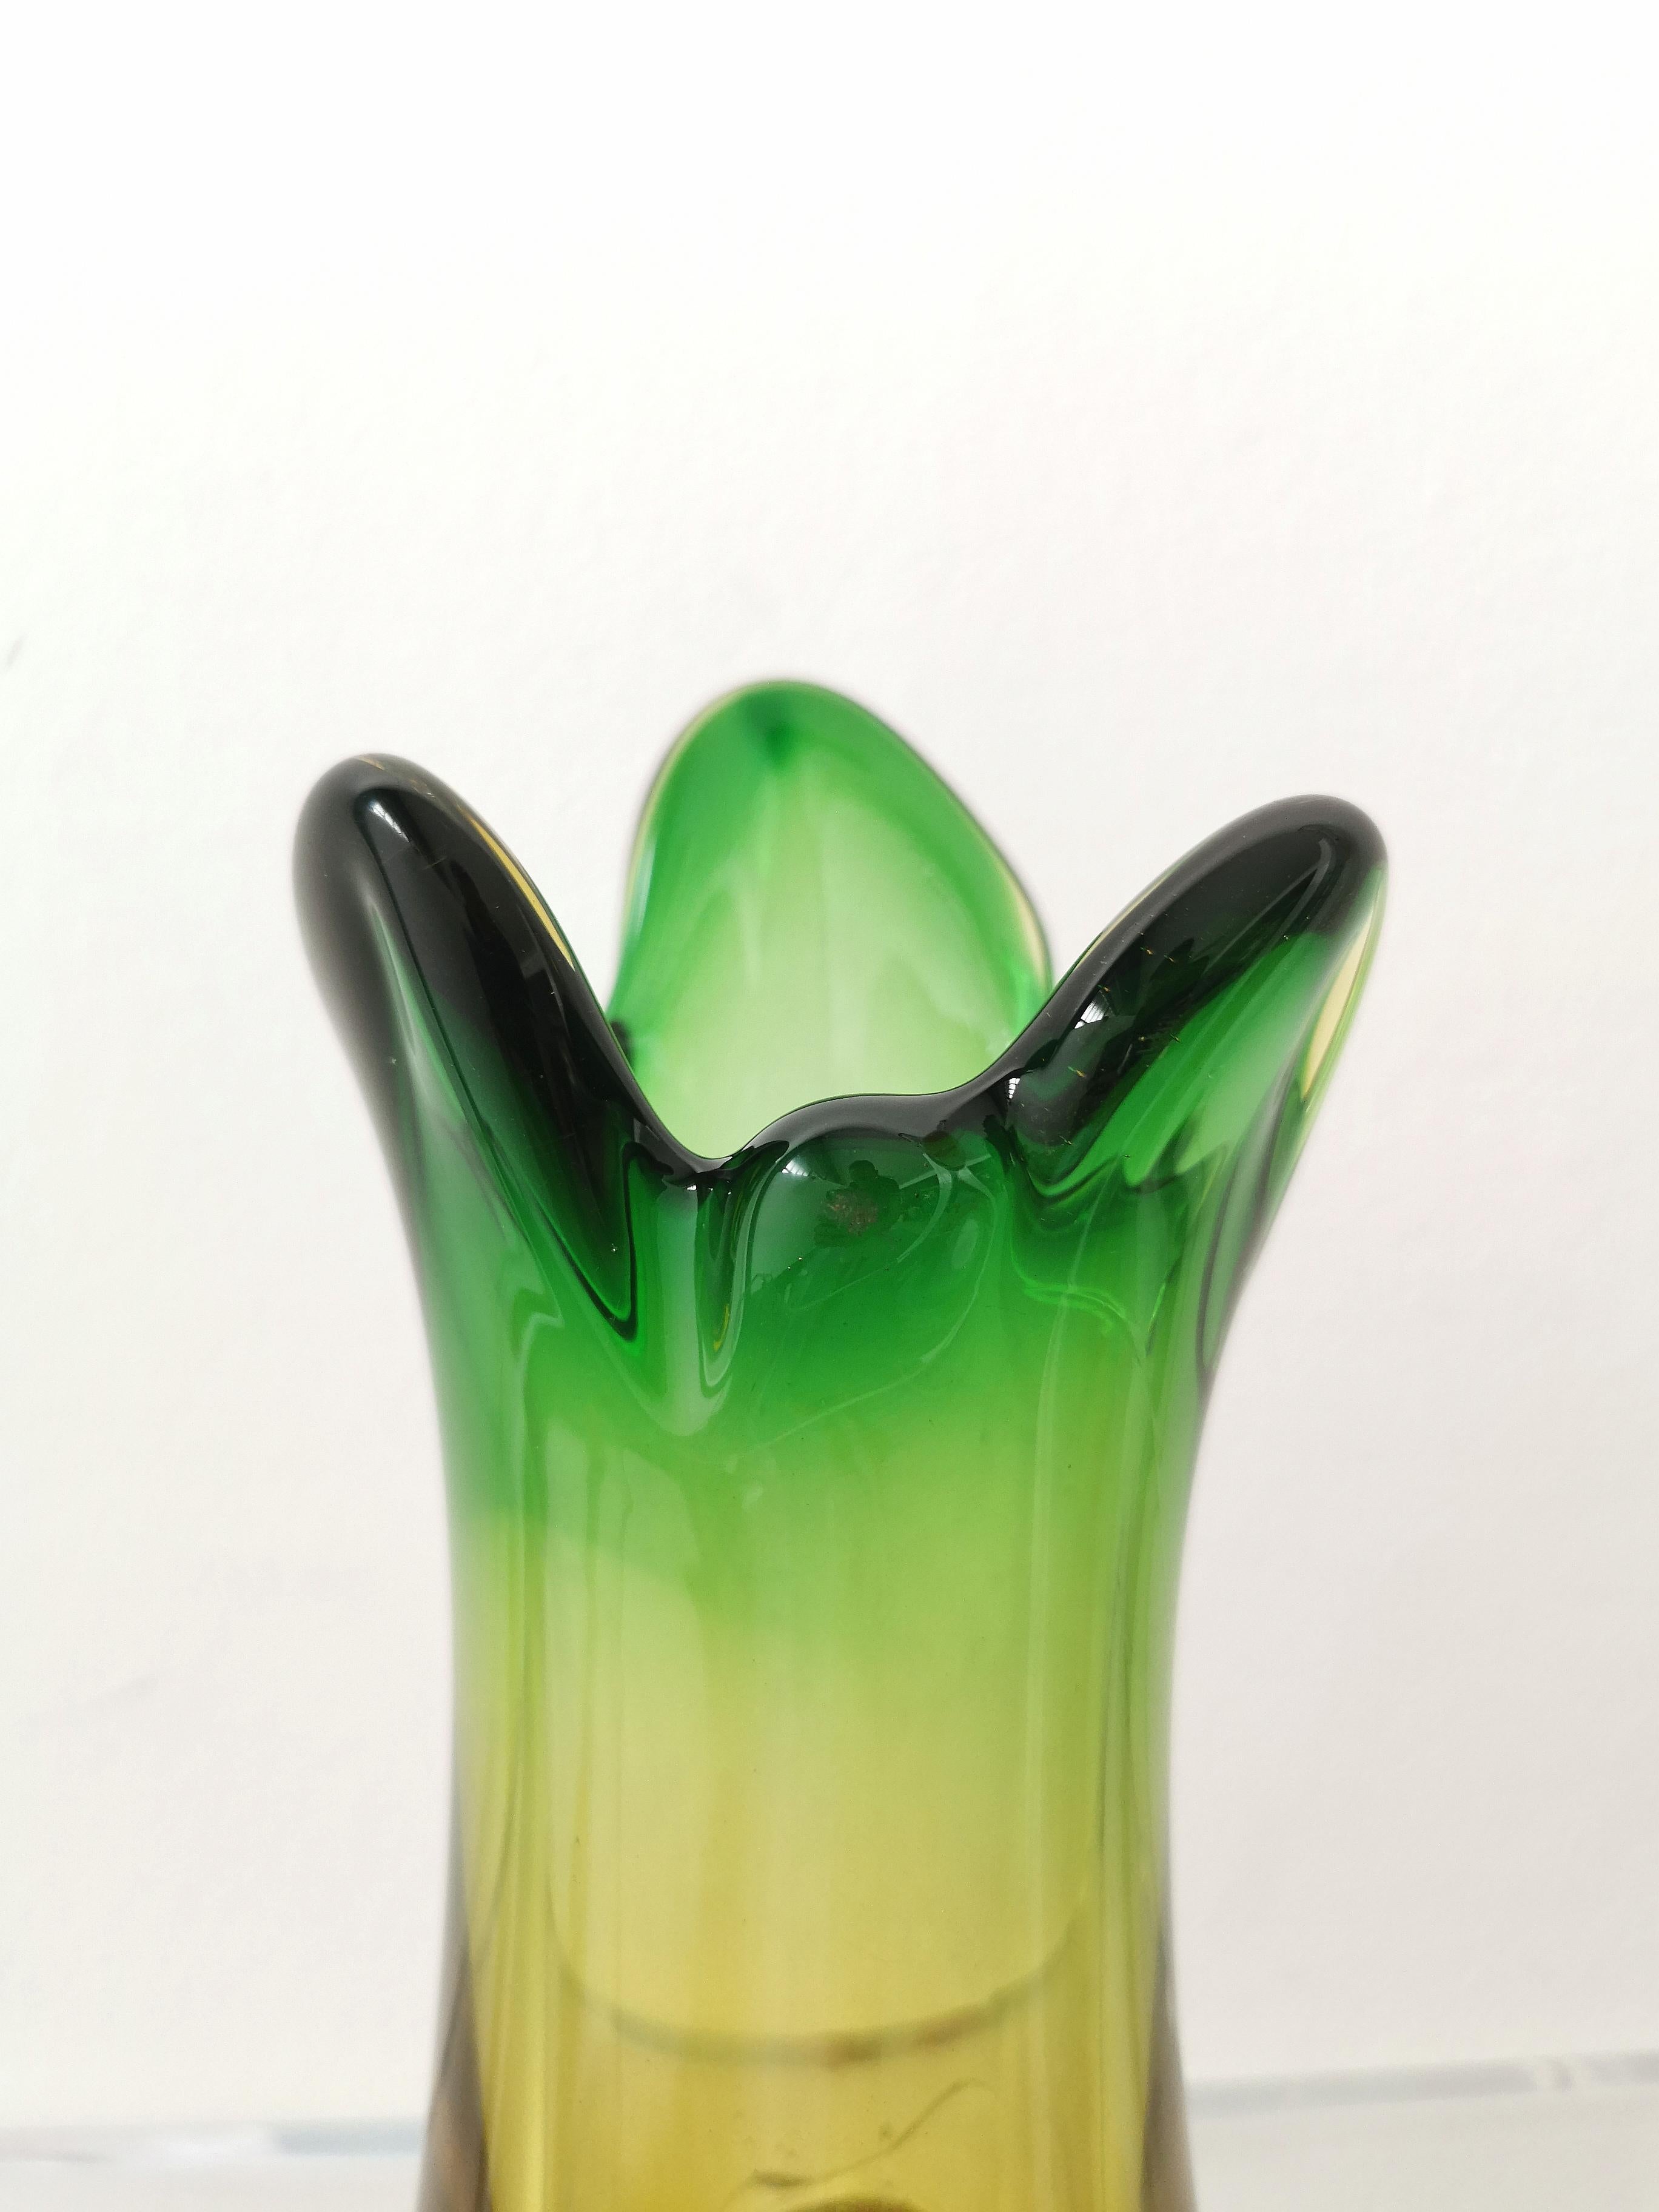 Mid-Century Modern Midcentury Murano Glass Vase De Majo Green Decorative Object Italian Design 1970